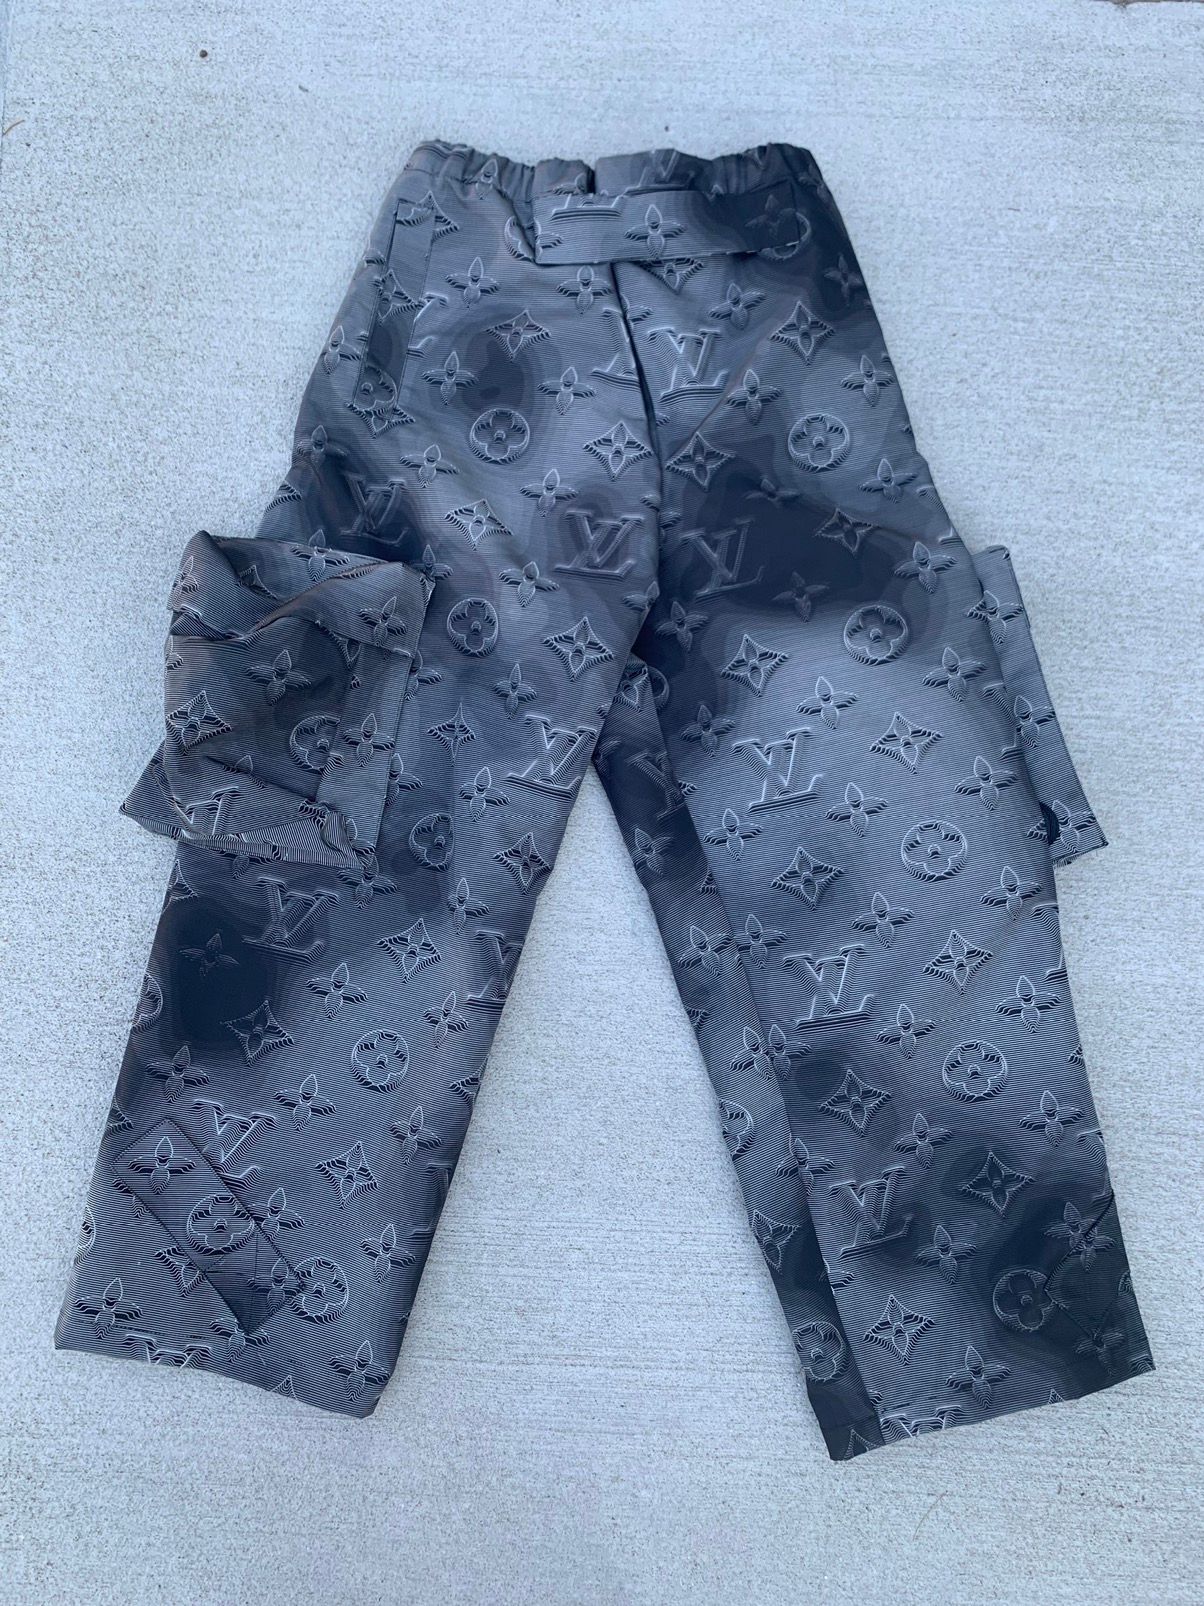 The cargo pants Louis Vuitton Monogram bag 3D removable worn by